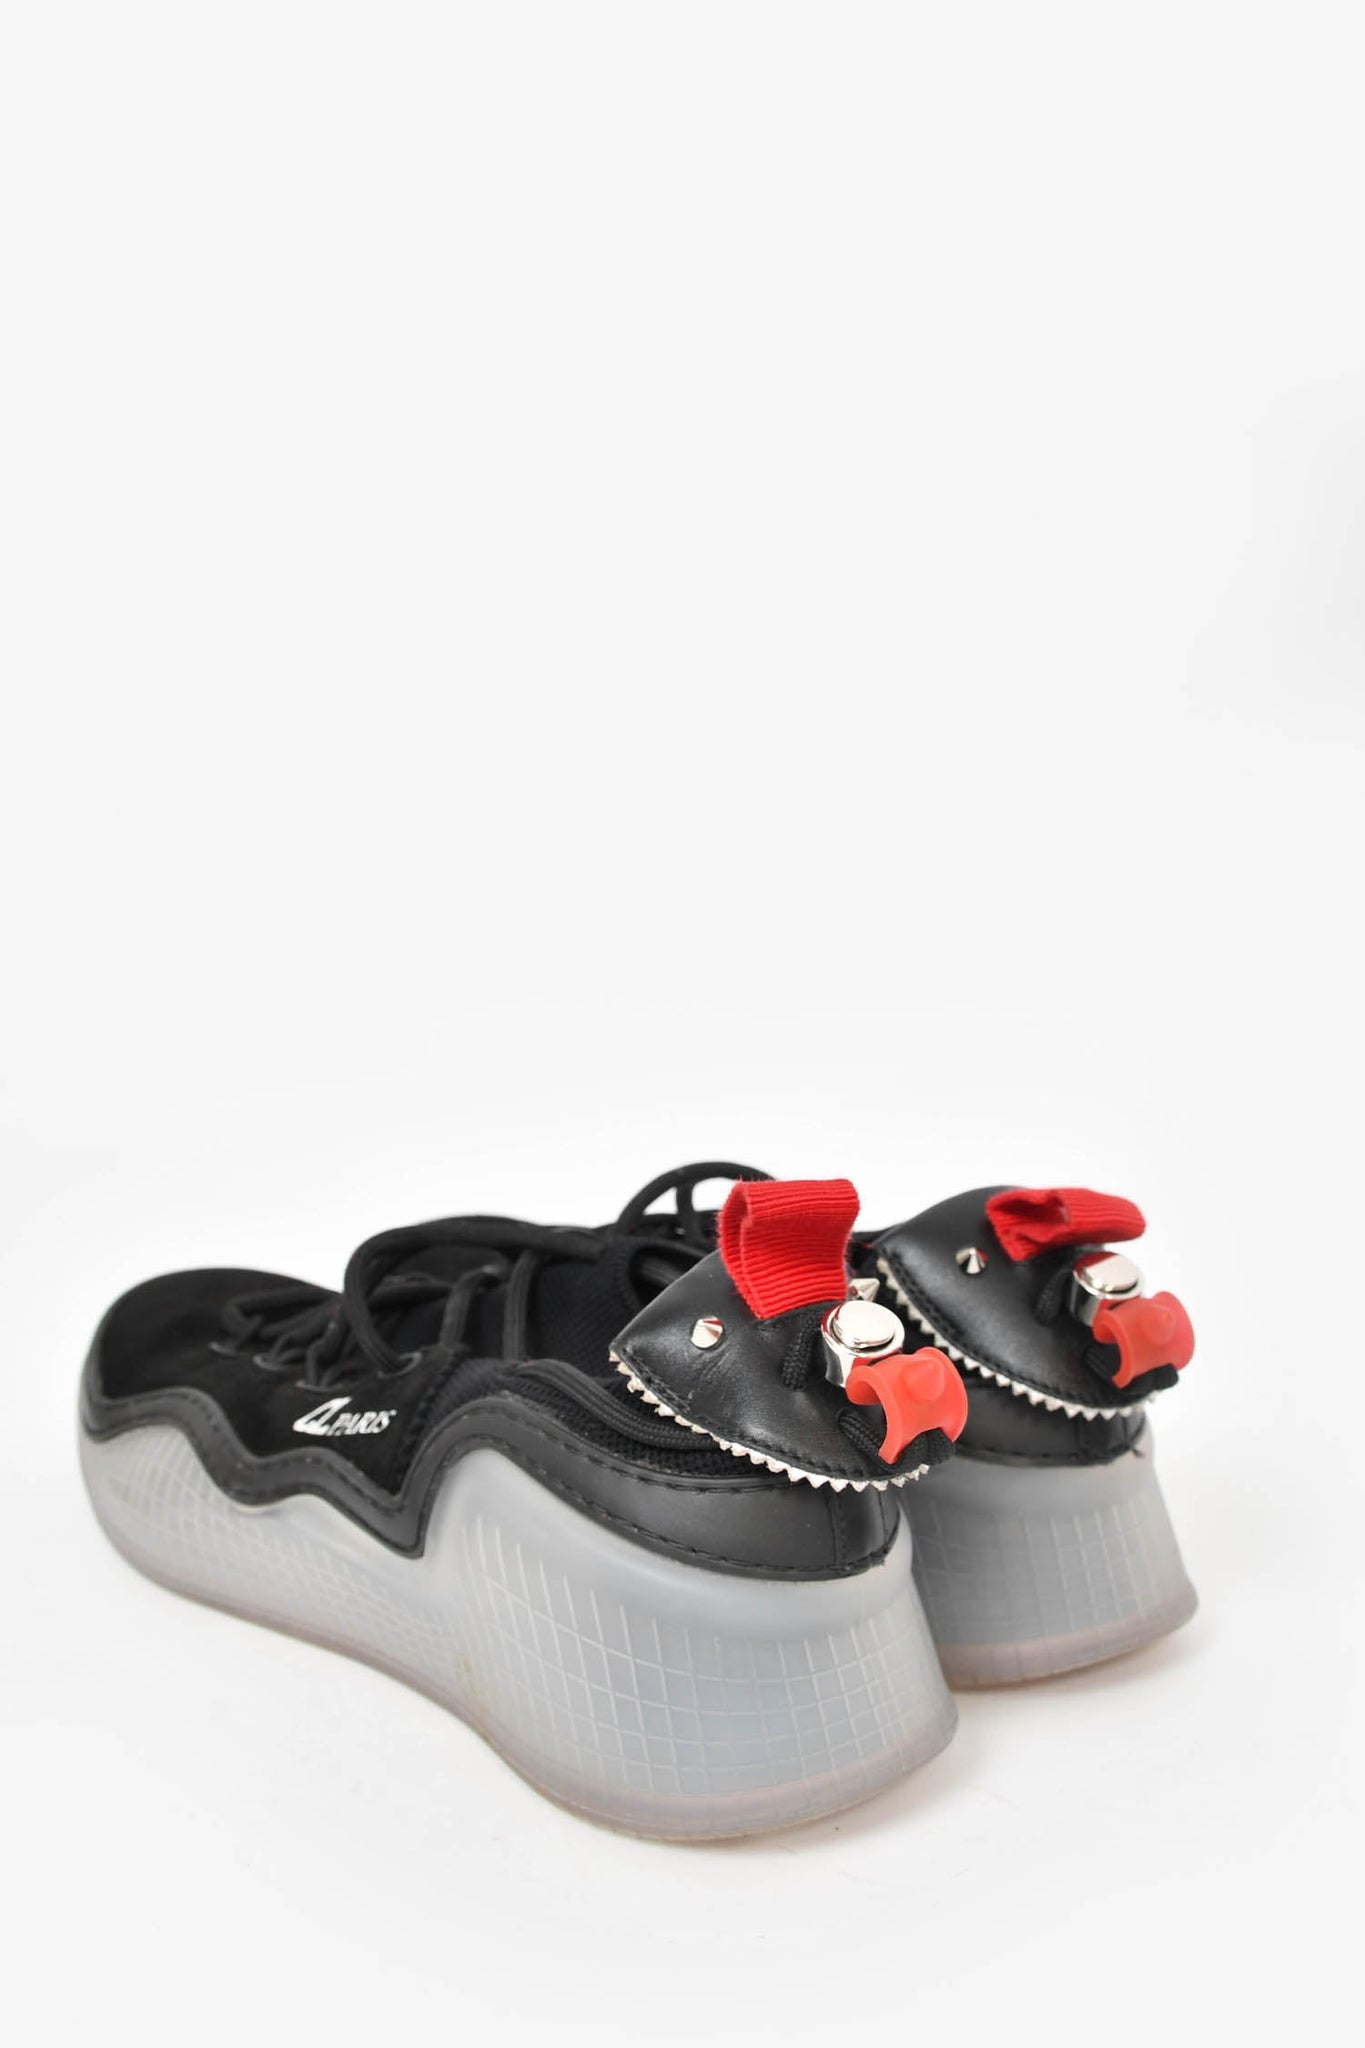 Christian Louboutin Black Mesh Arpoador Sneakers Size 40.5 Mens